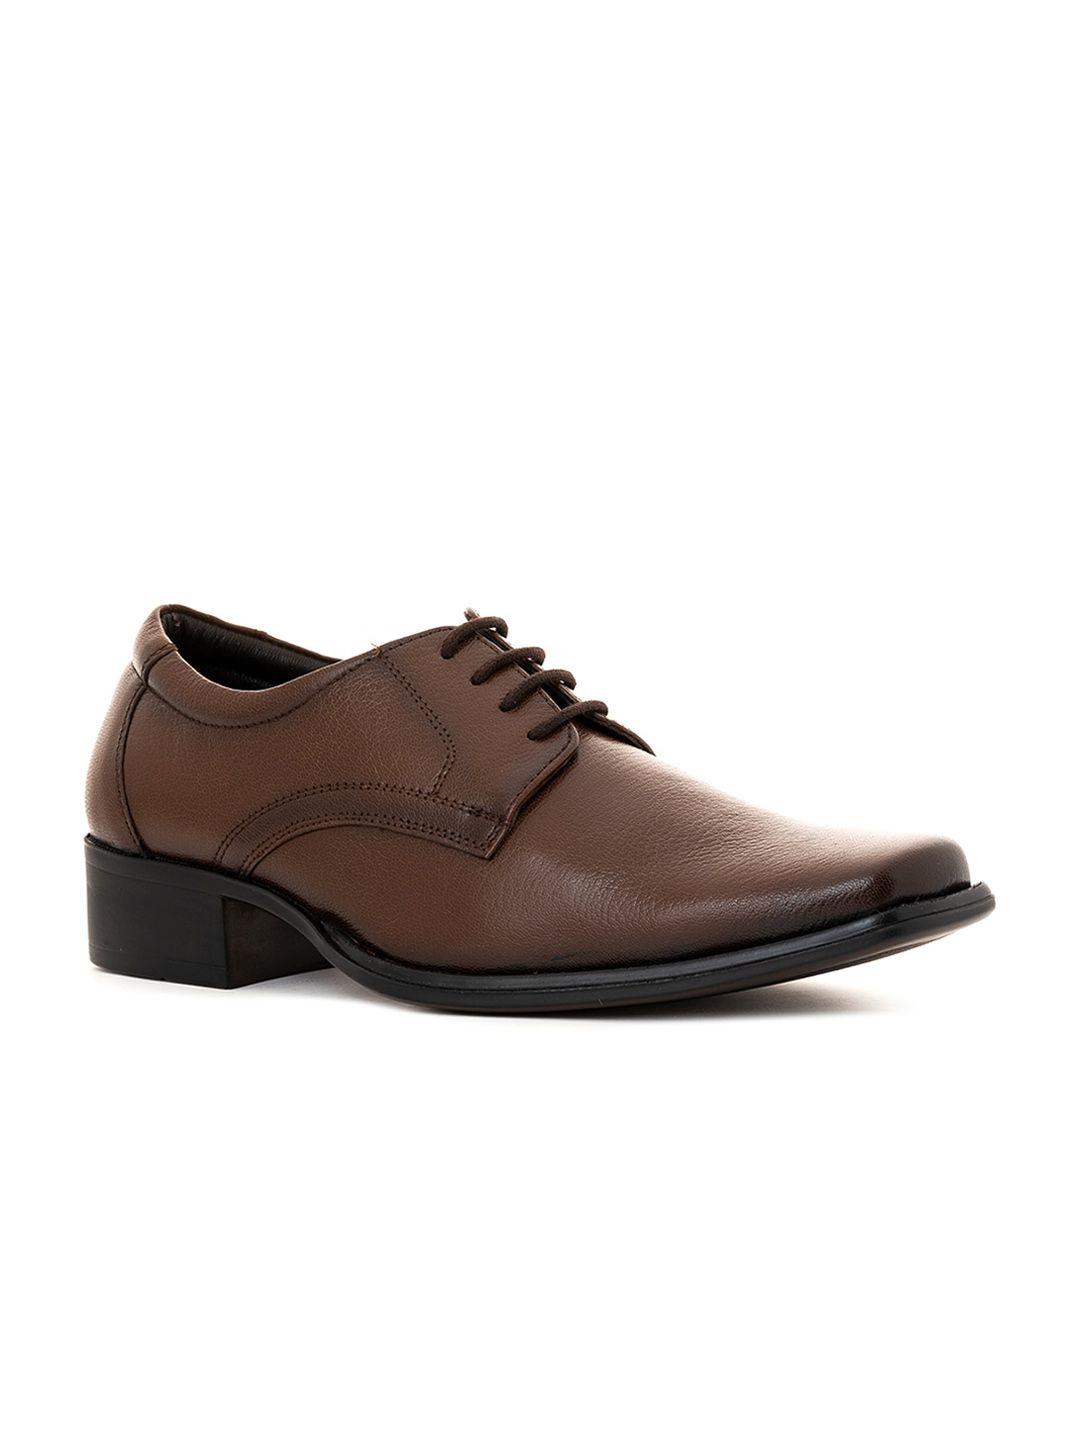 khadims-men-brown-solid-formal-leather-derbys